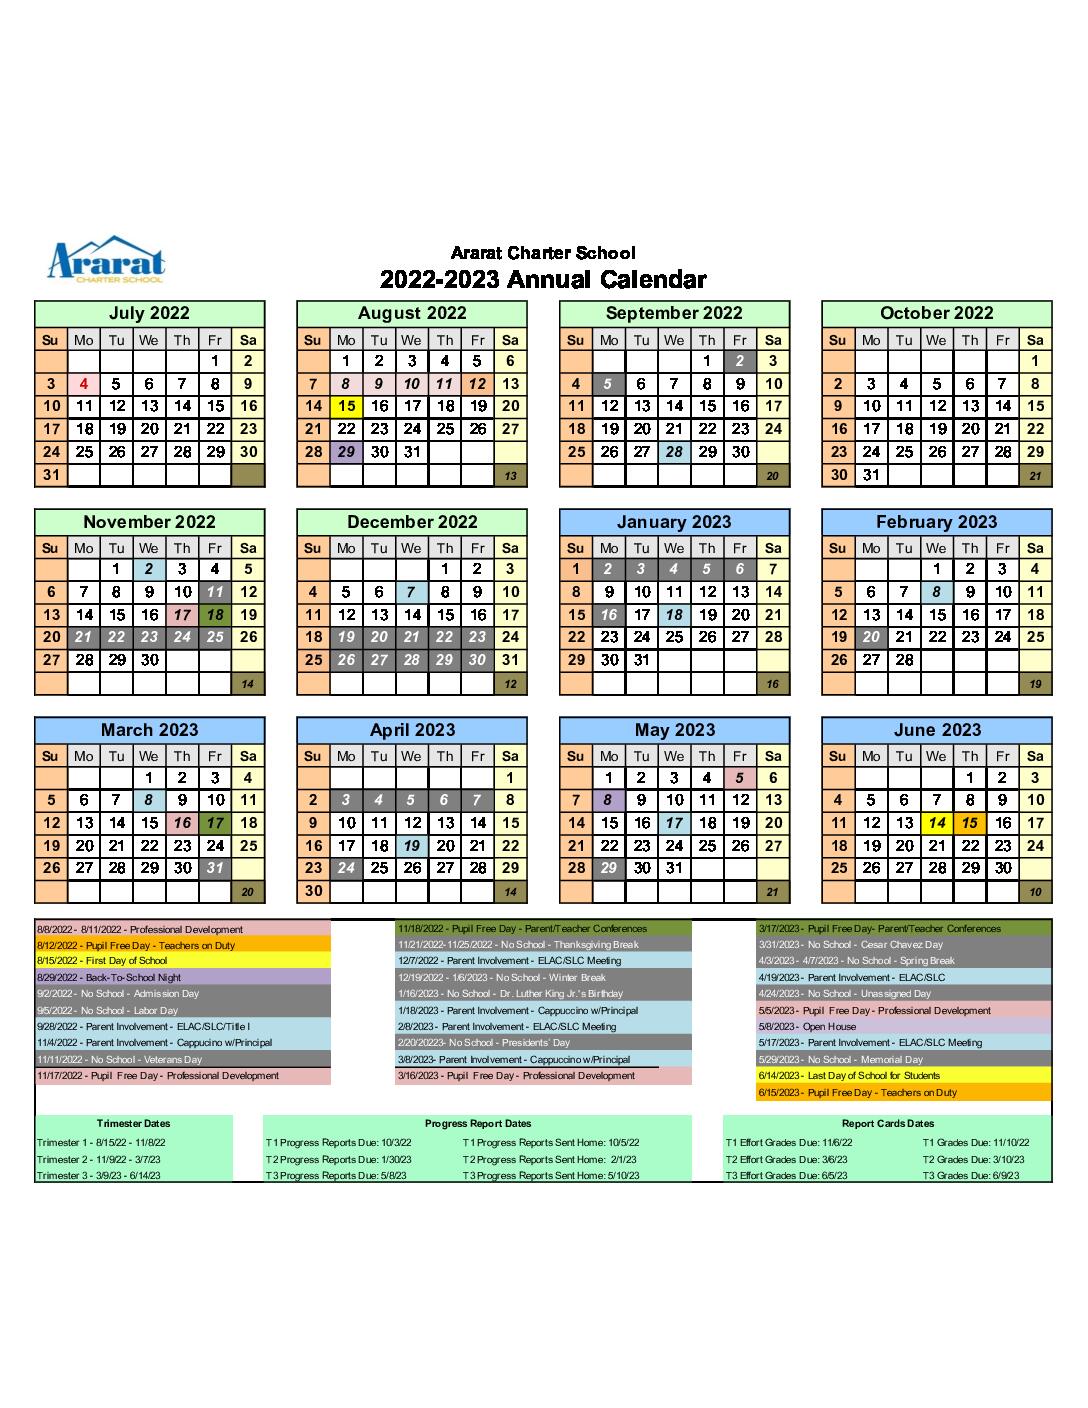 Annual Calendar Ararat Charter School